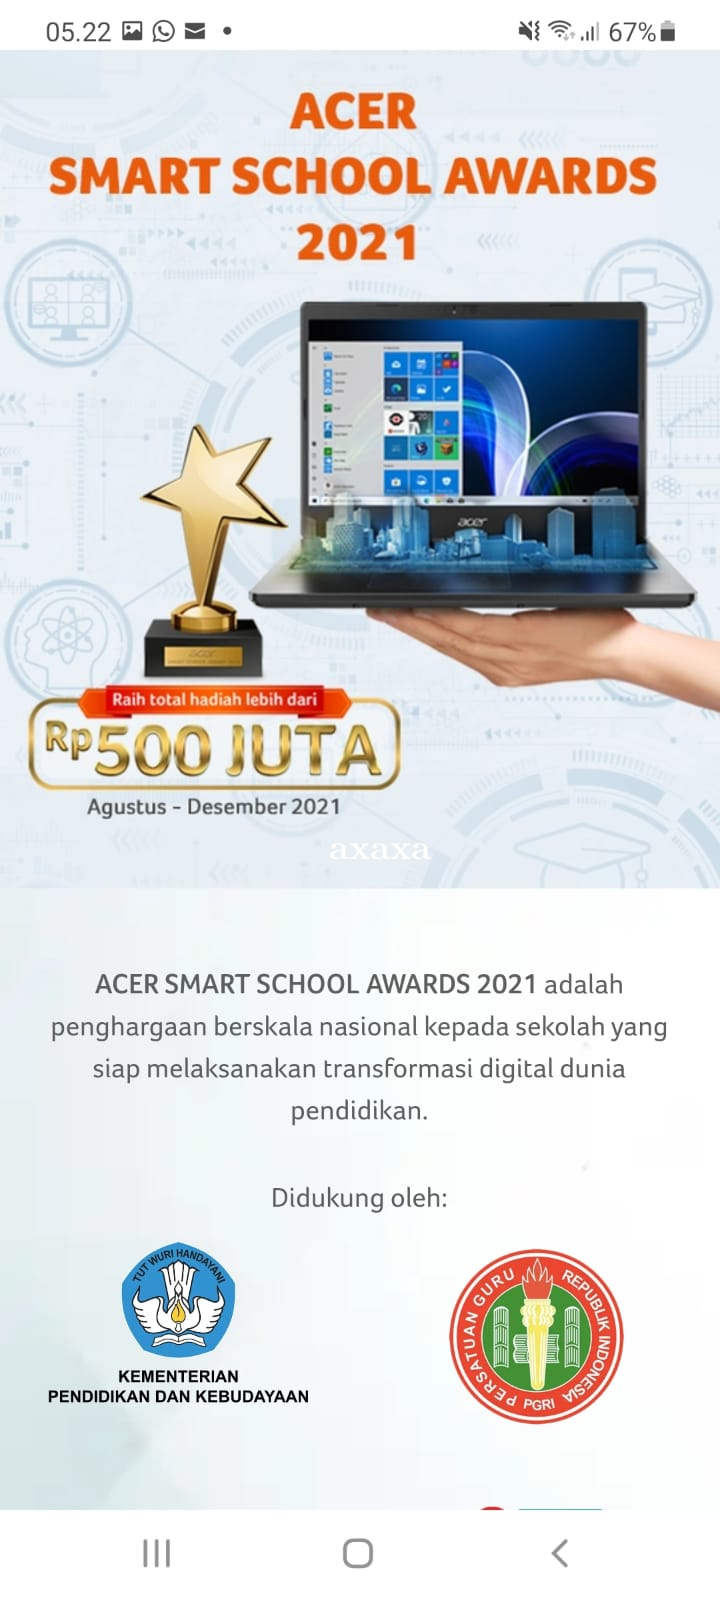 ACER SMART SCHOOL AWARDS 2021